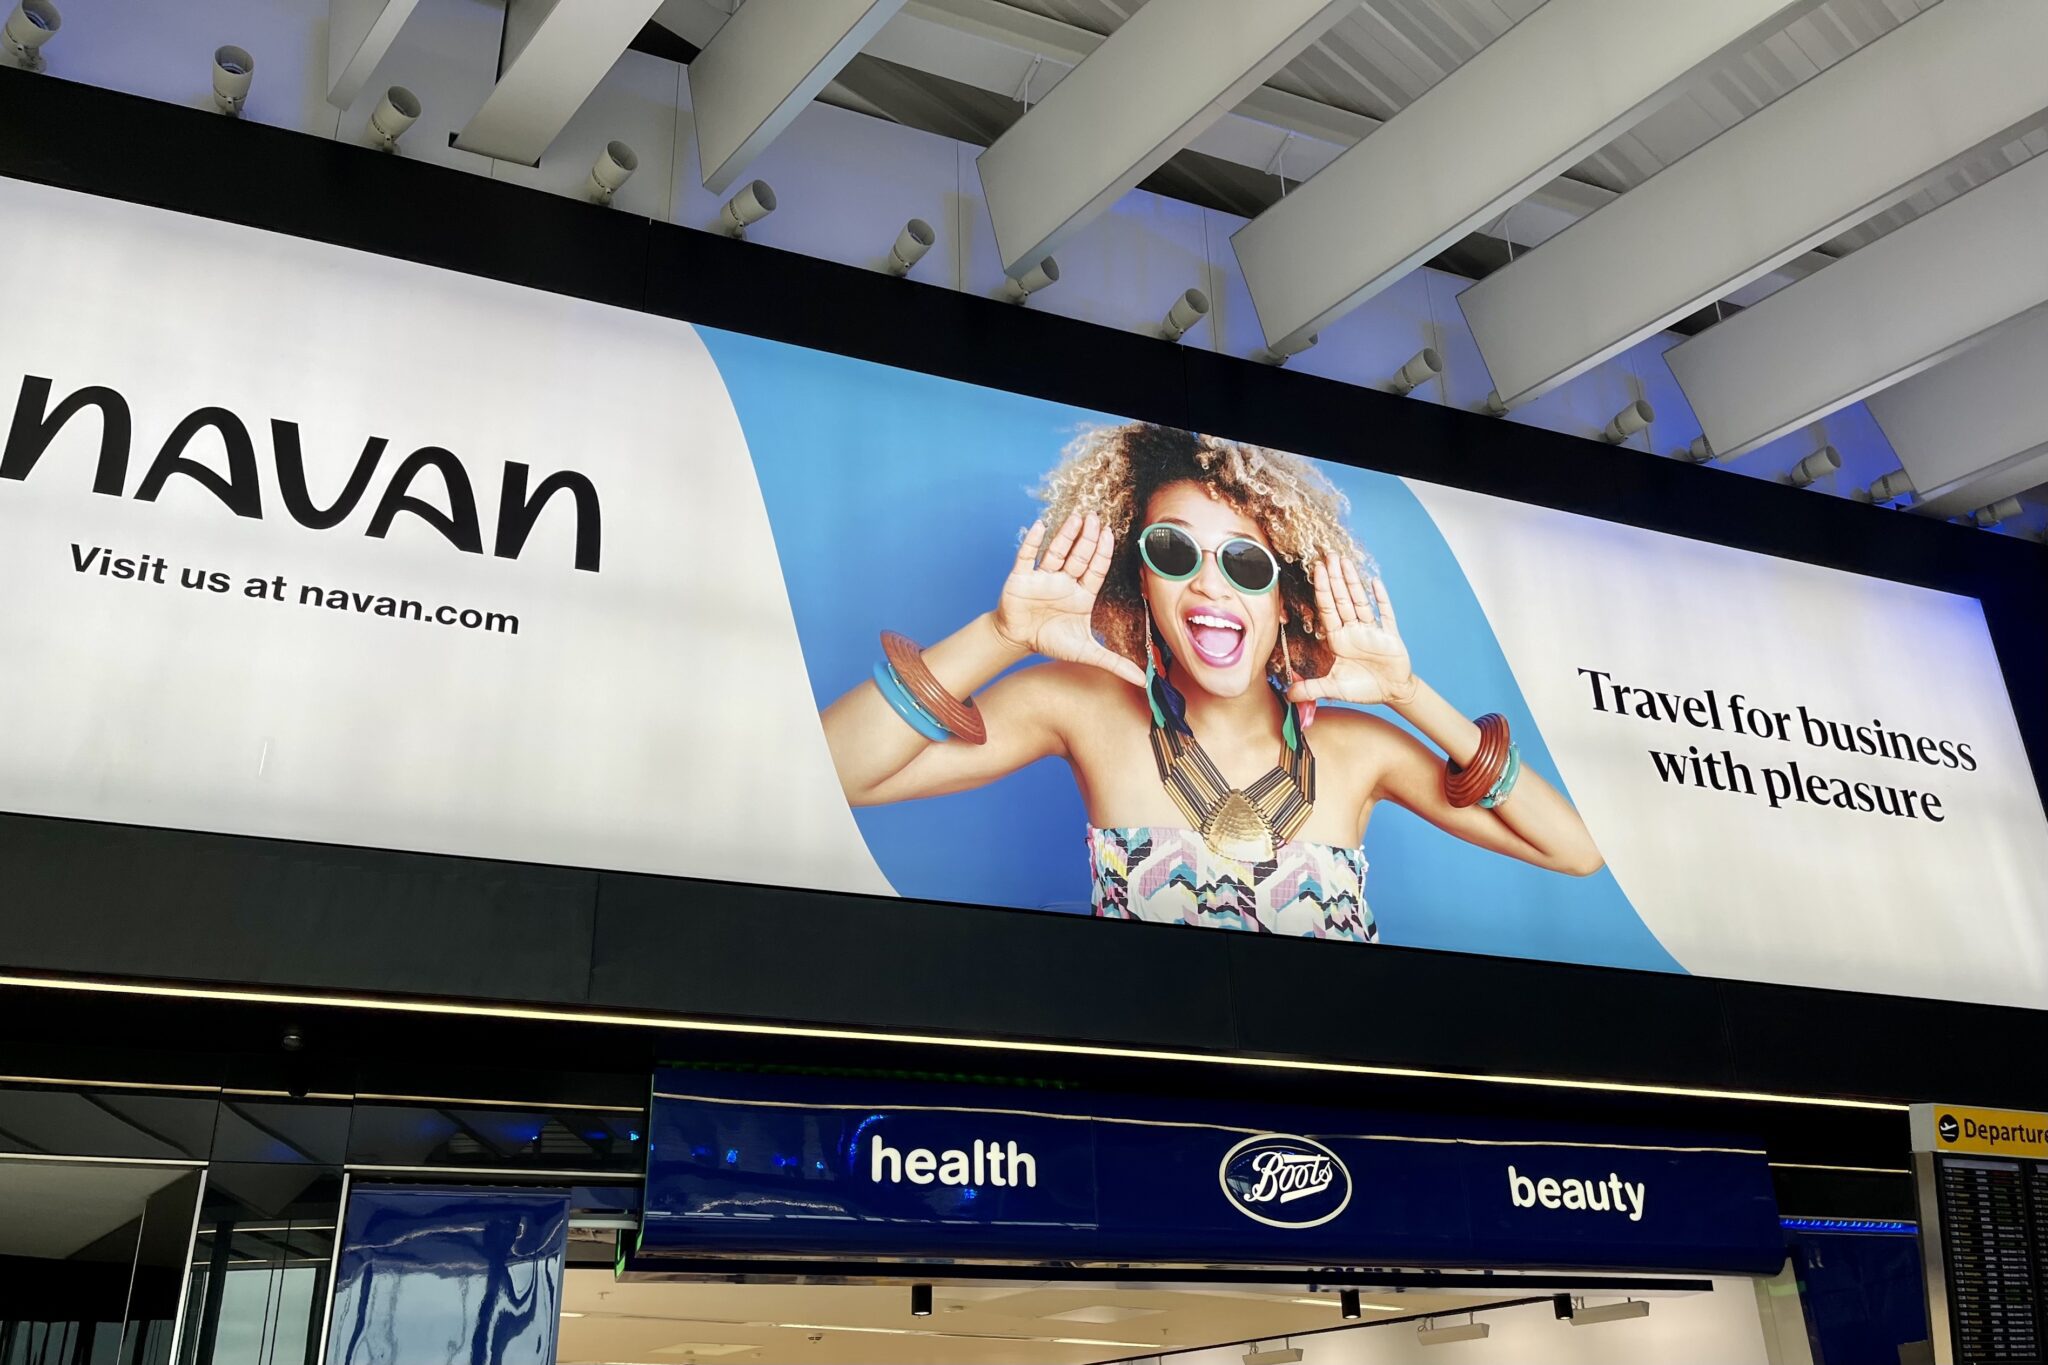 A Navan advertisement at Heathrow Airport